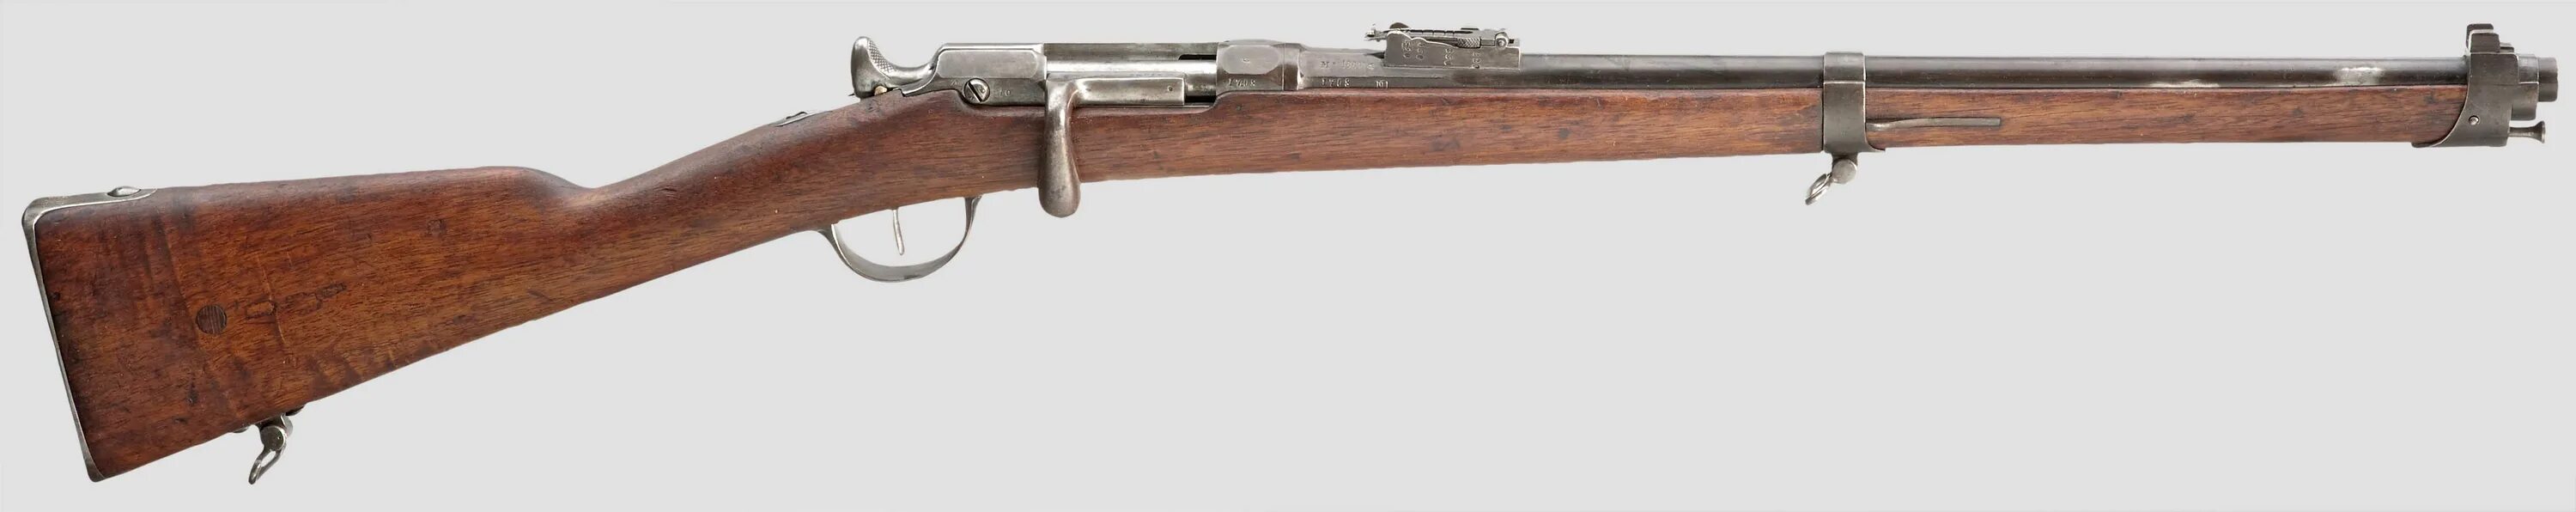 Винтовка Мурата Тип 13. Винтовка Мурата 1889. Японская винтовка Мурата. Springfield m1903 и винтовка Мосина. Тип 13 no 7488